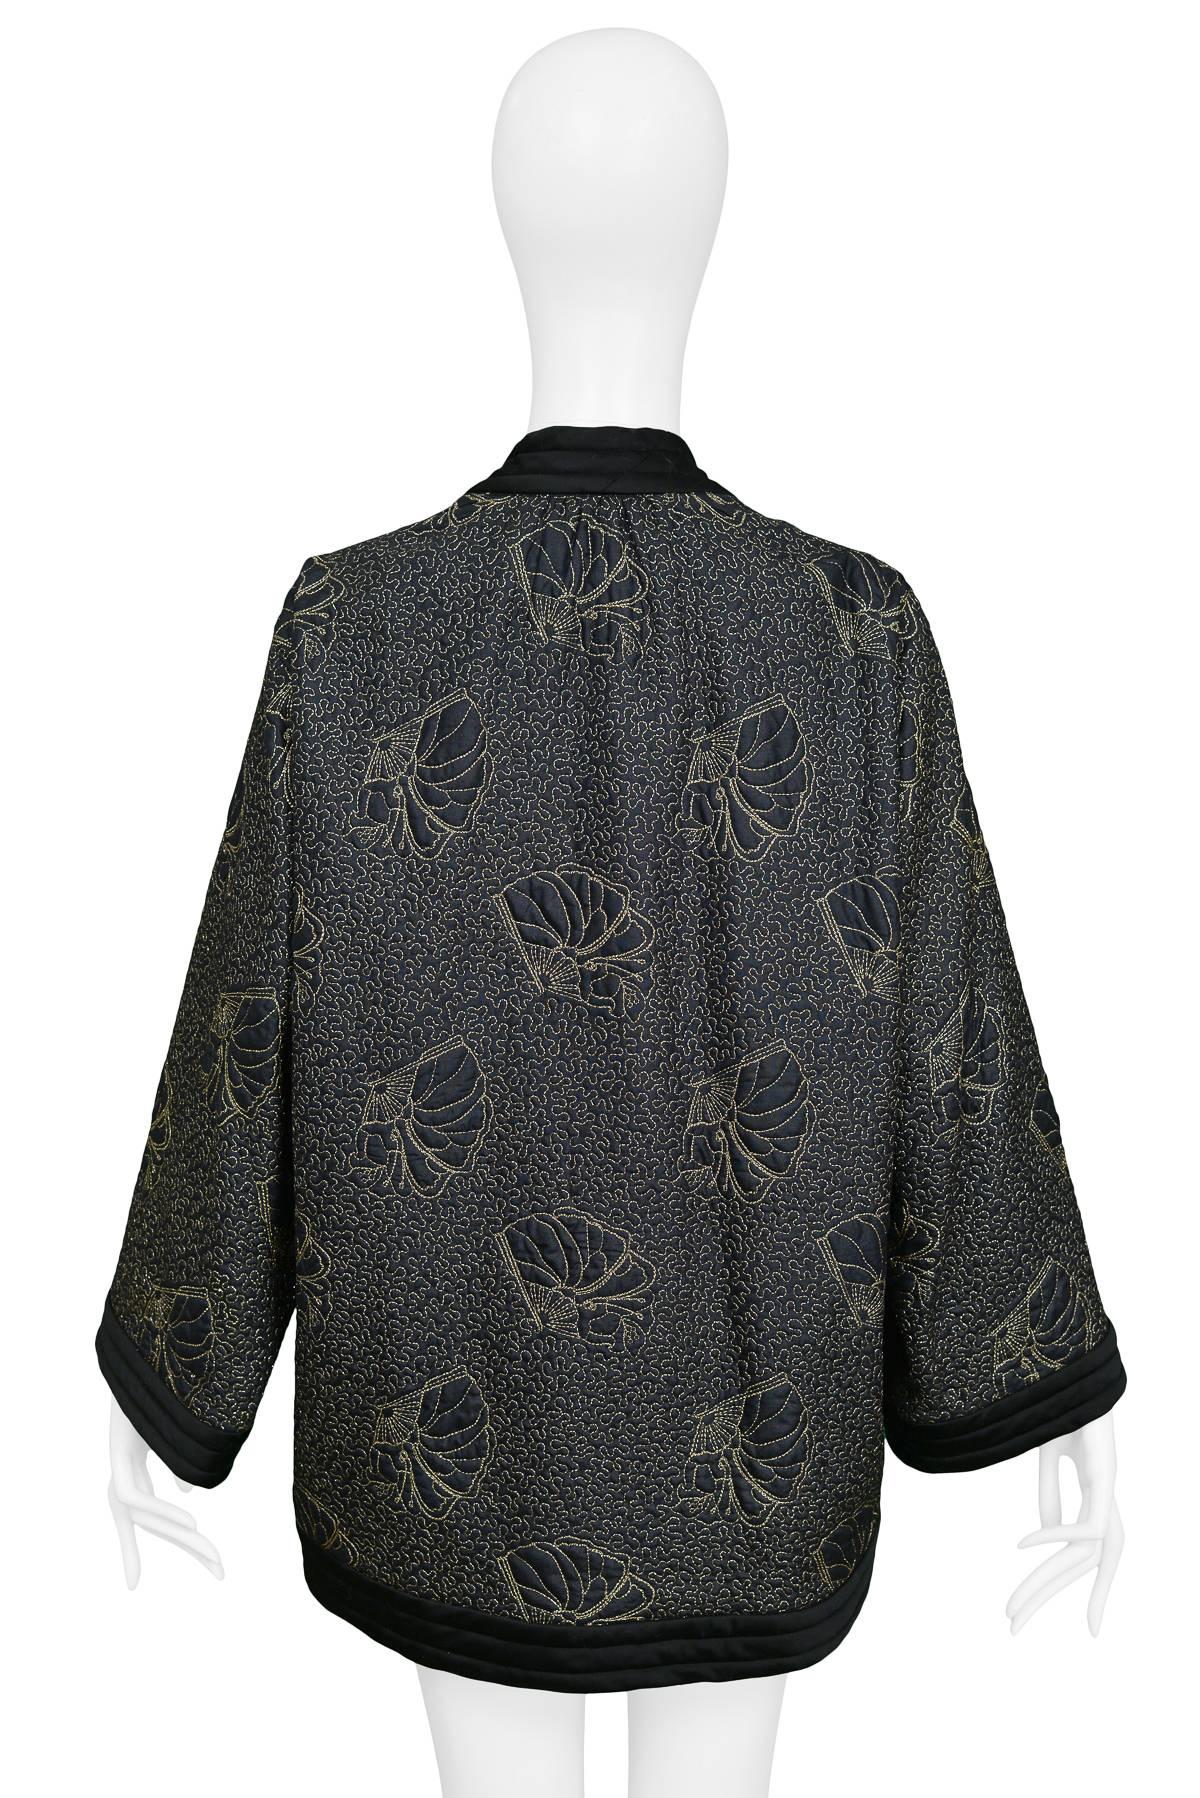 saint laurent kimono jacket